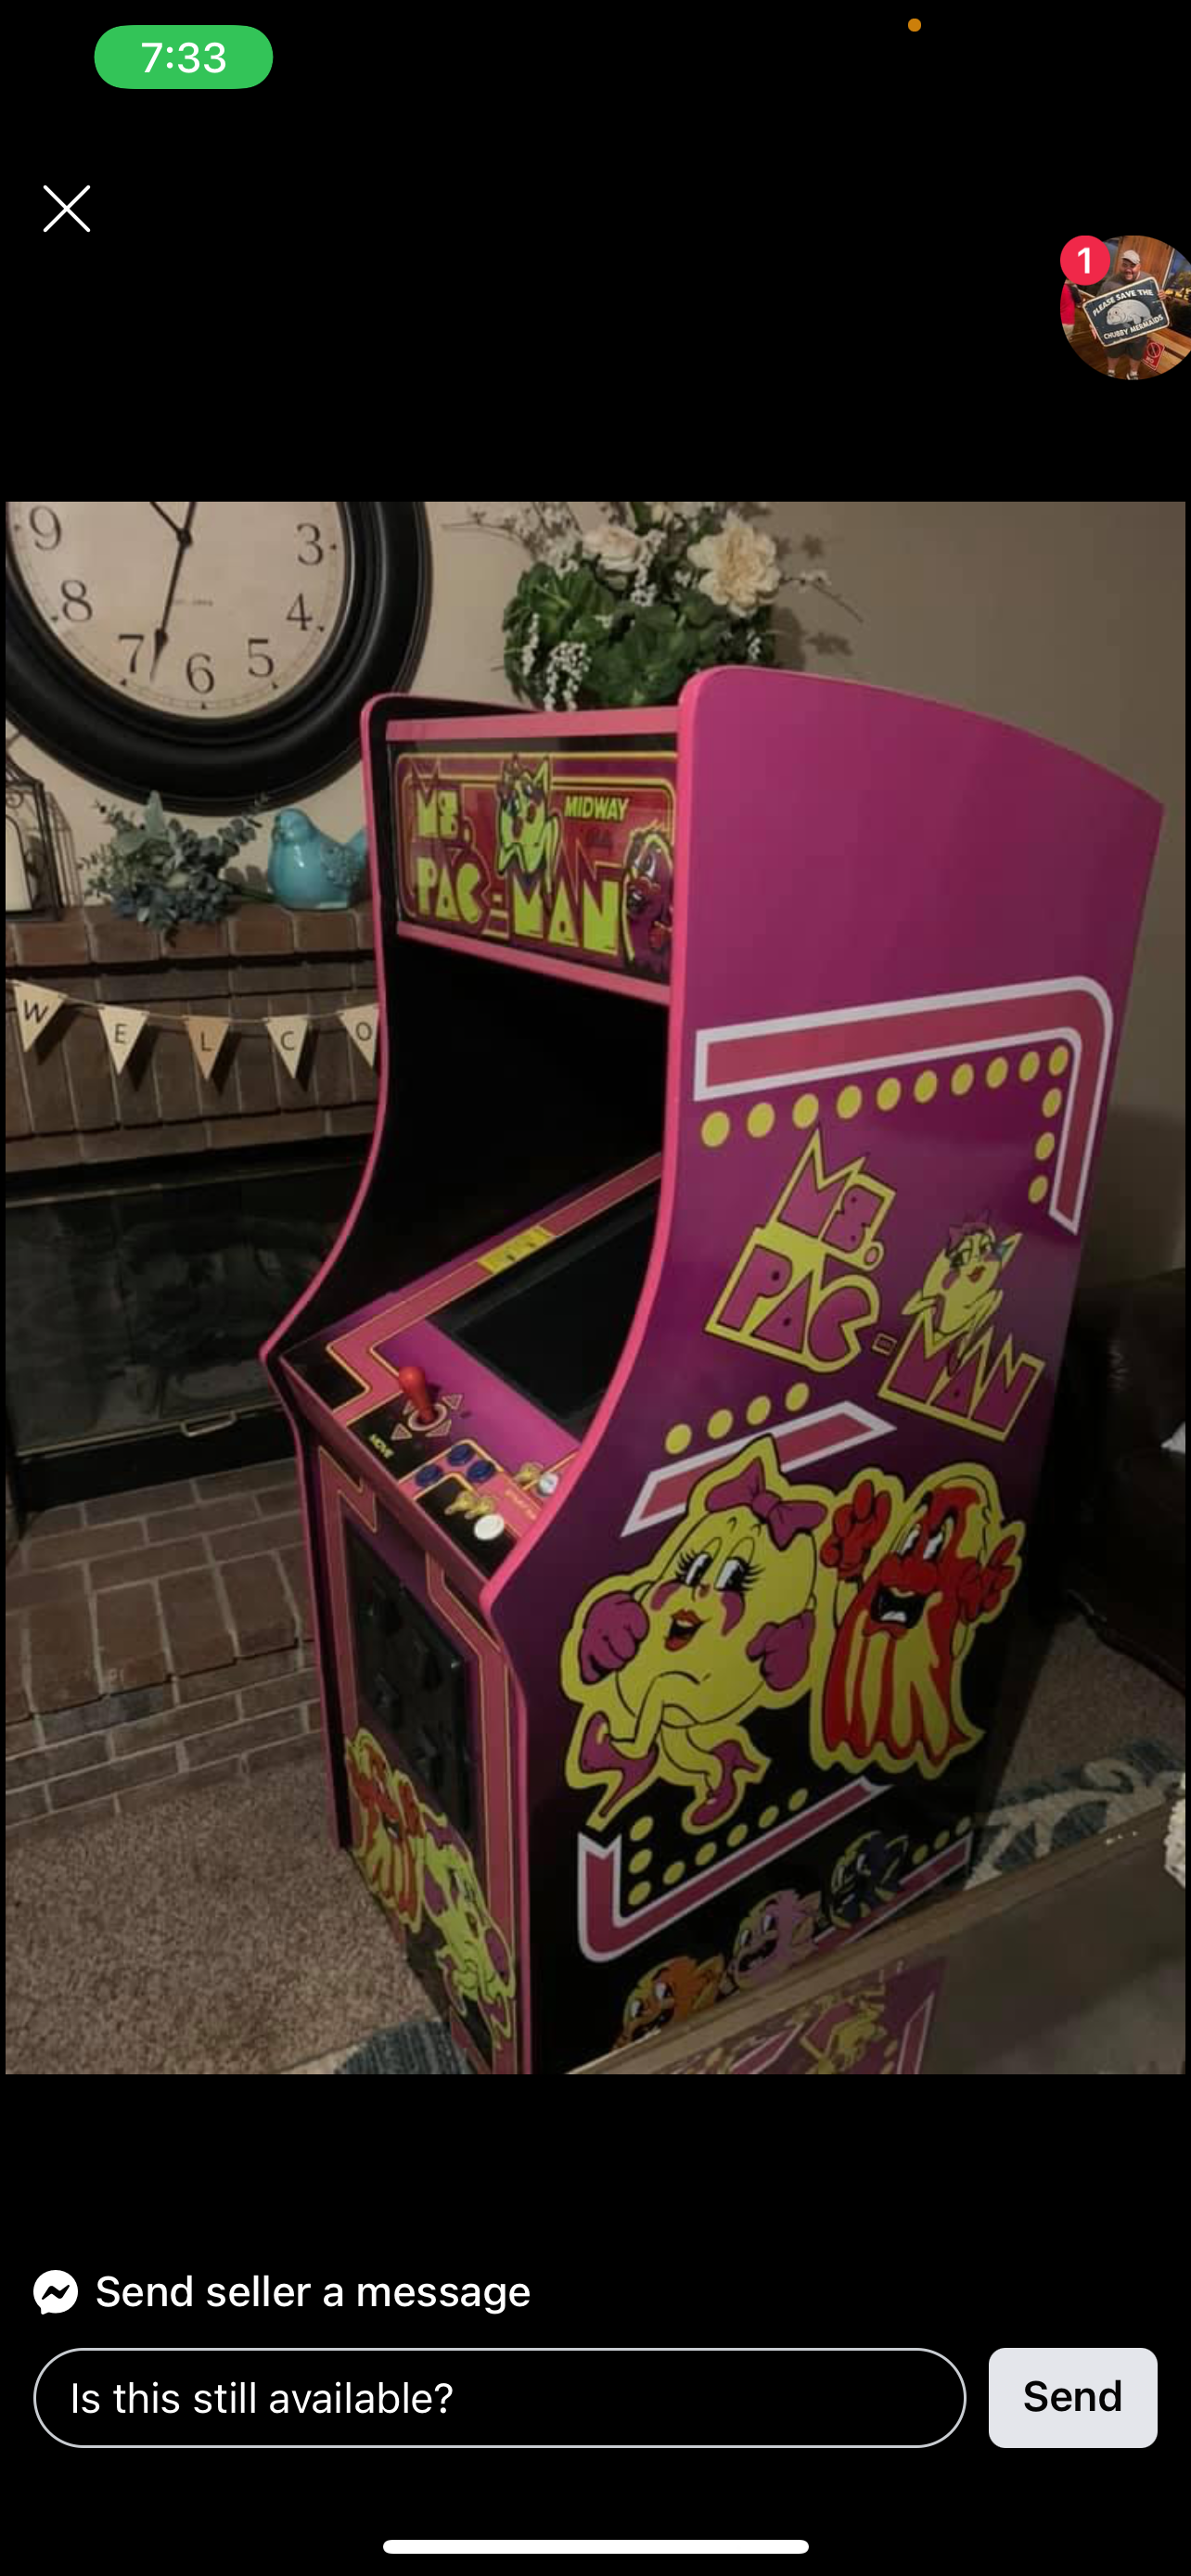 Ms Pac-Man Pinky Complete Art Kit